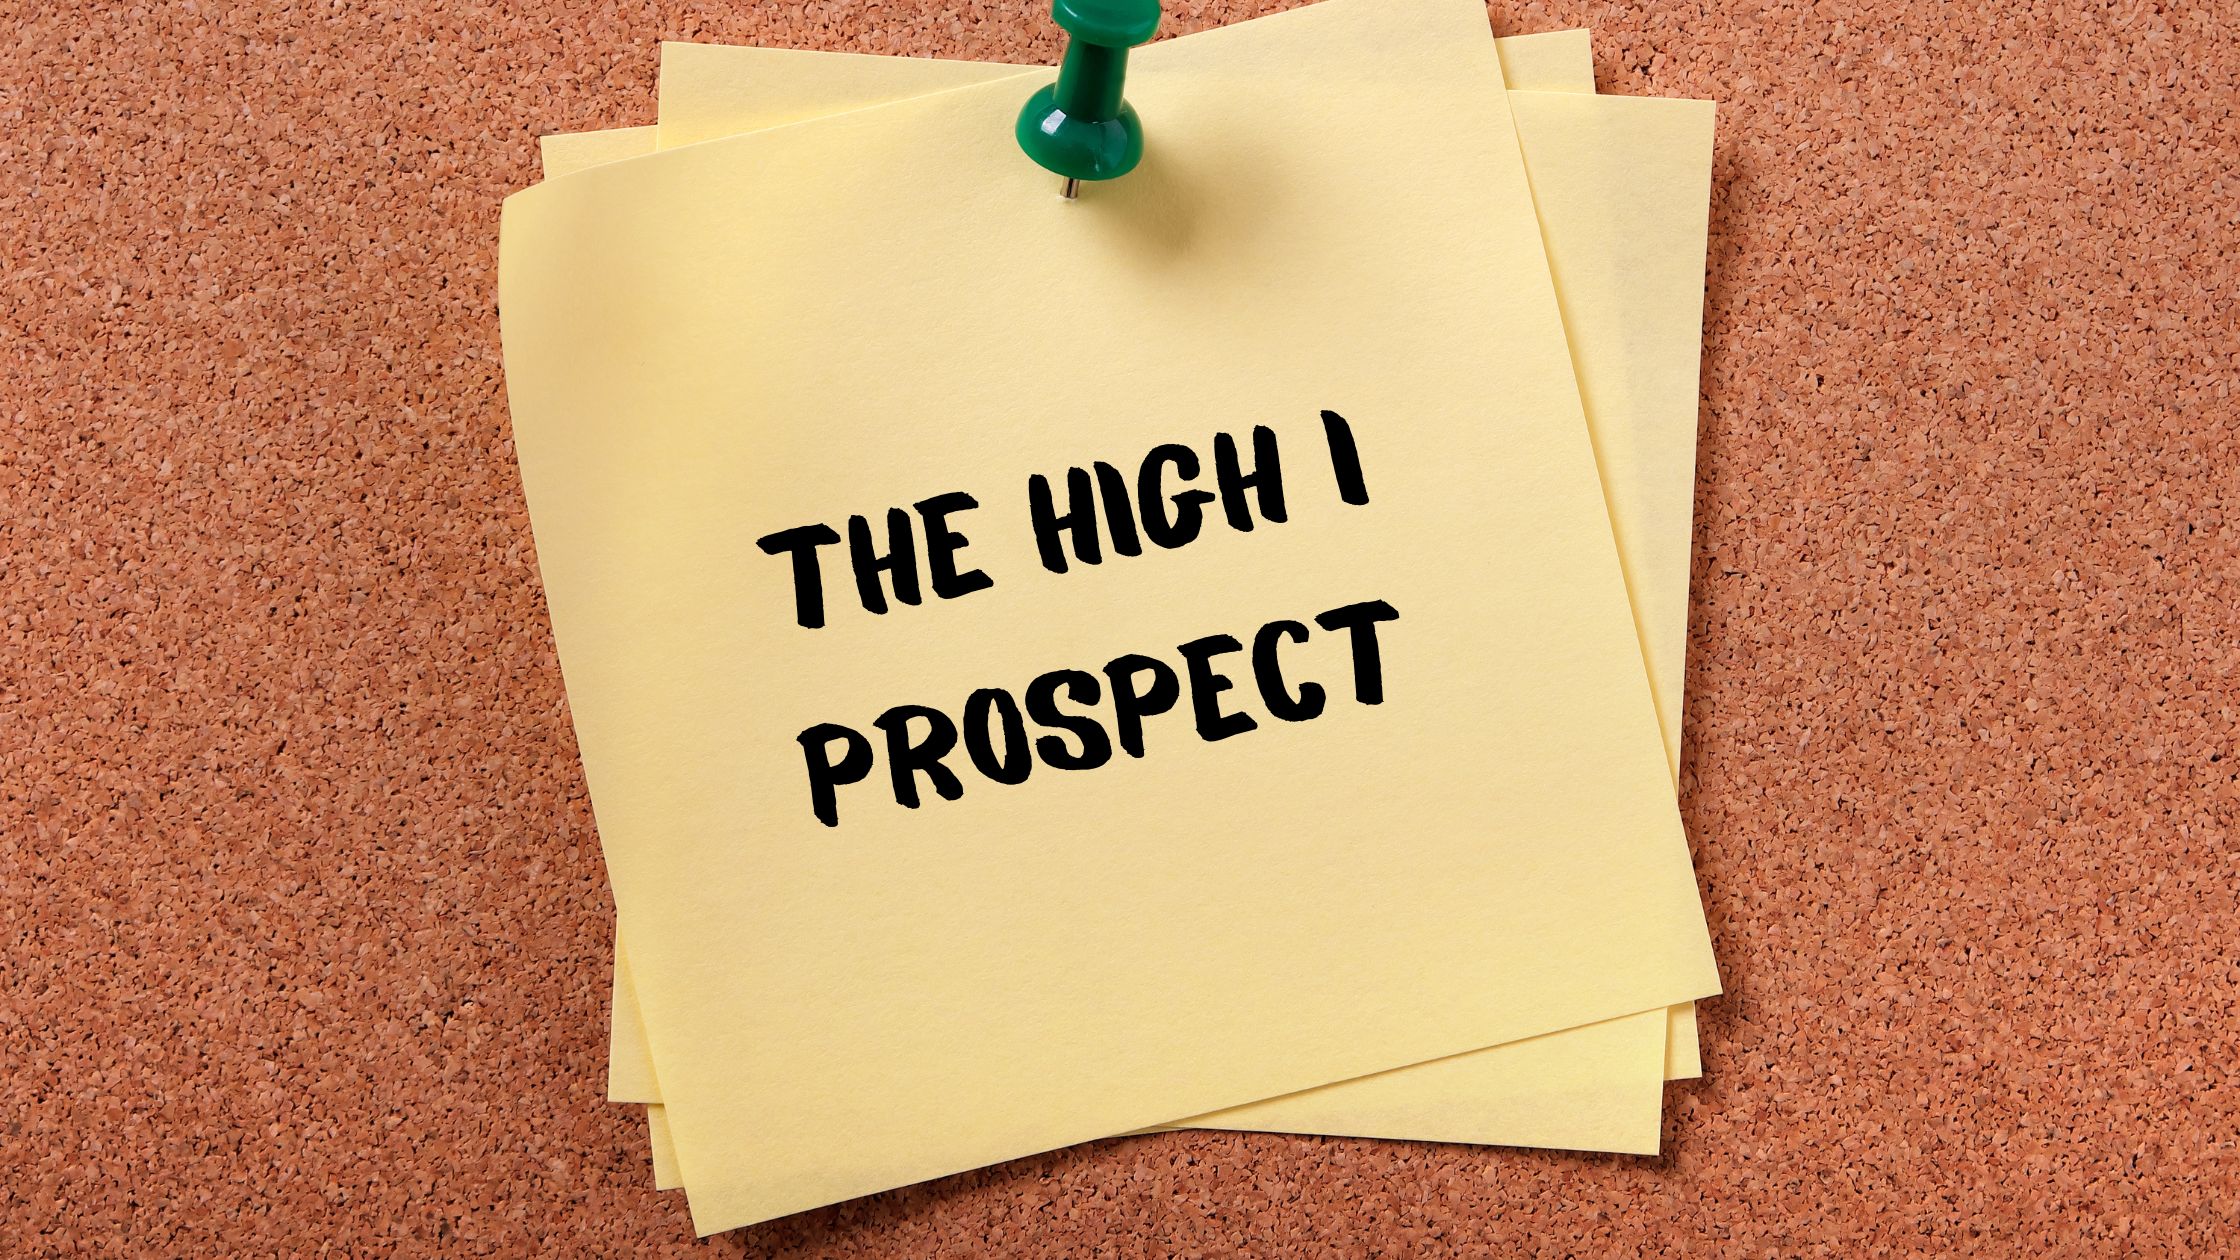 The High i Prospect